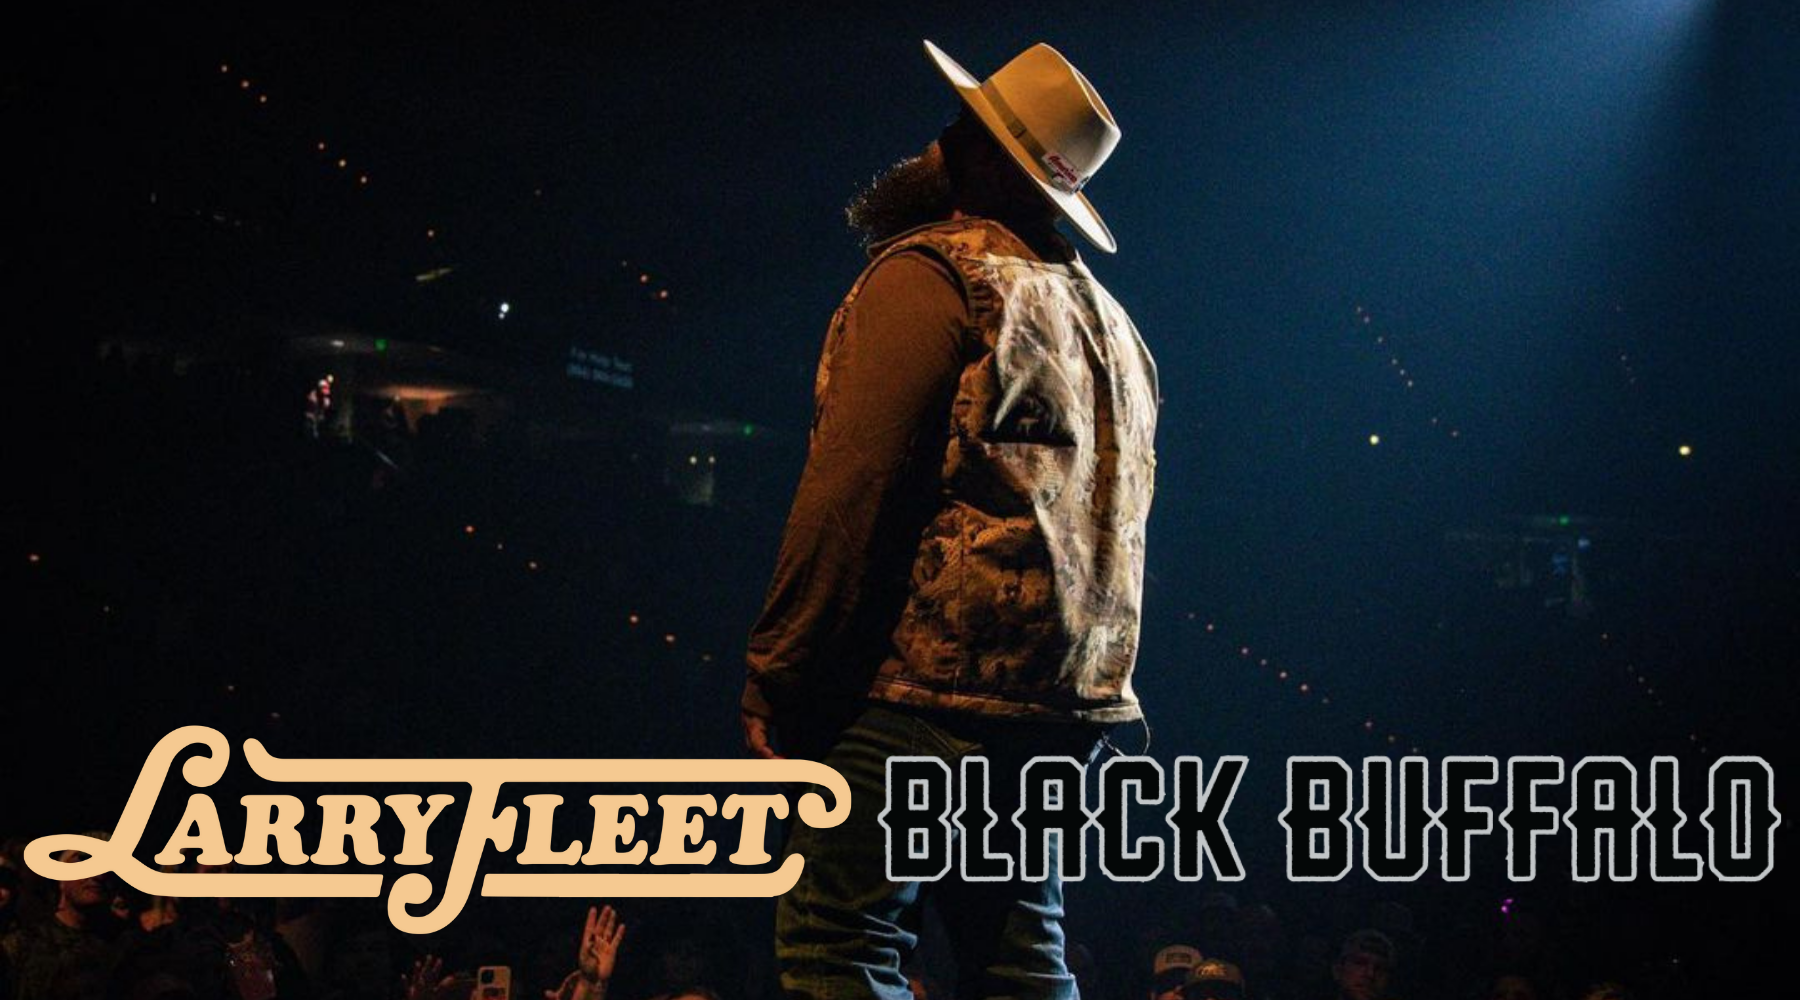 Larry Fleet Country Star | Black Buffalo Tour